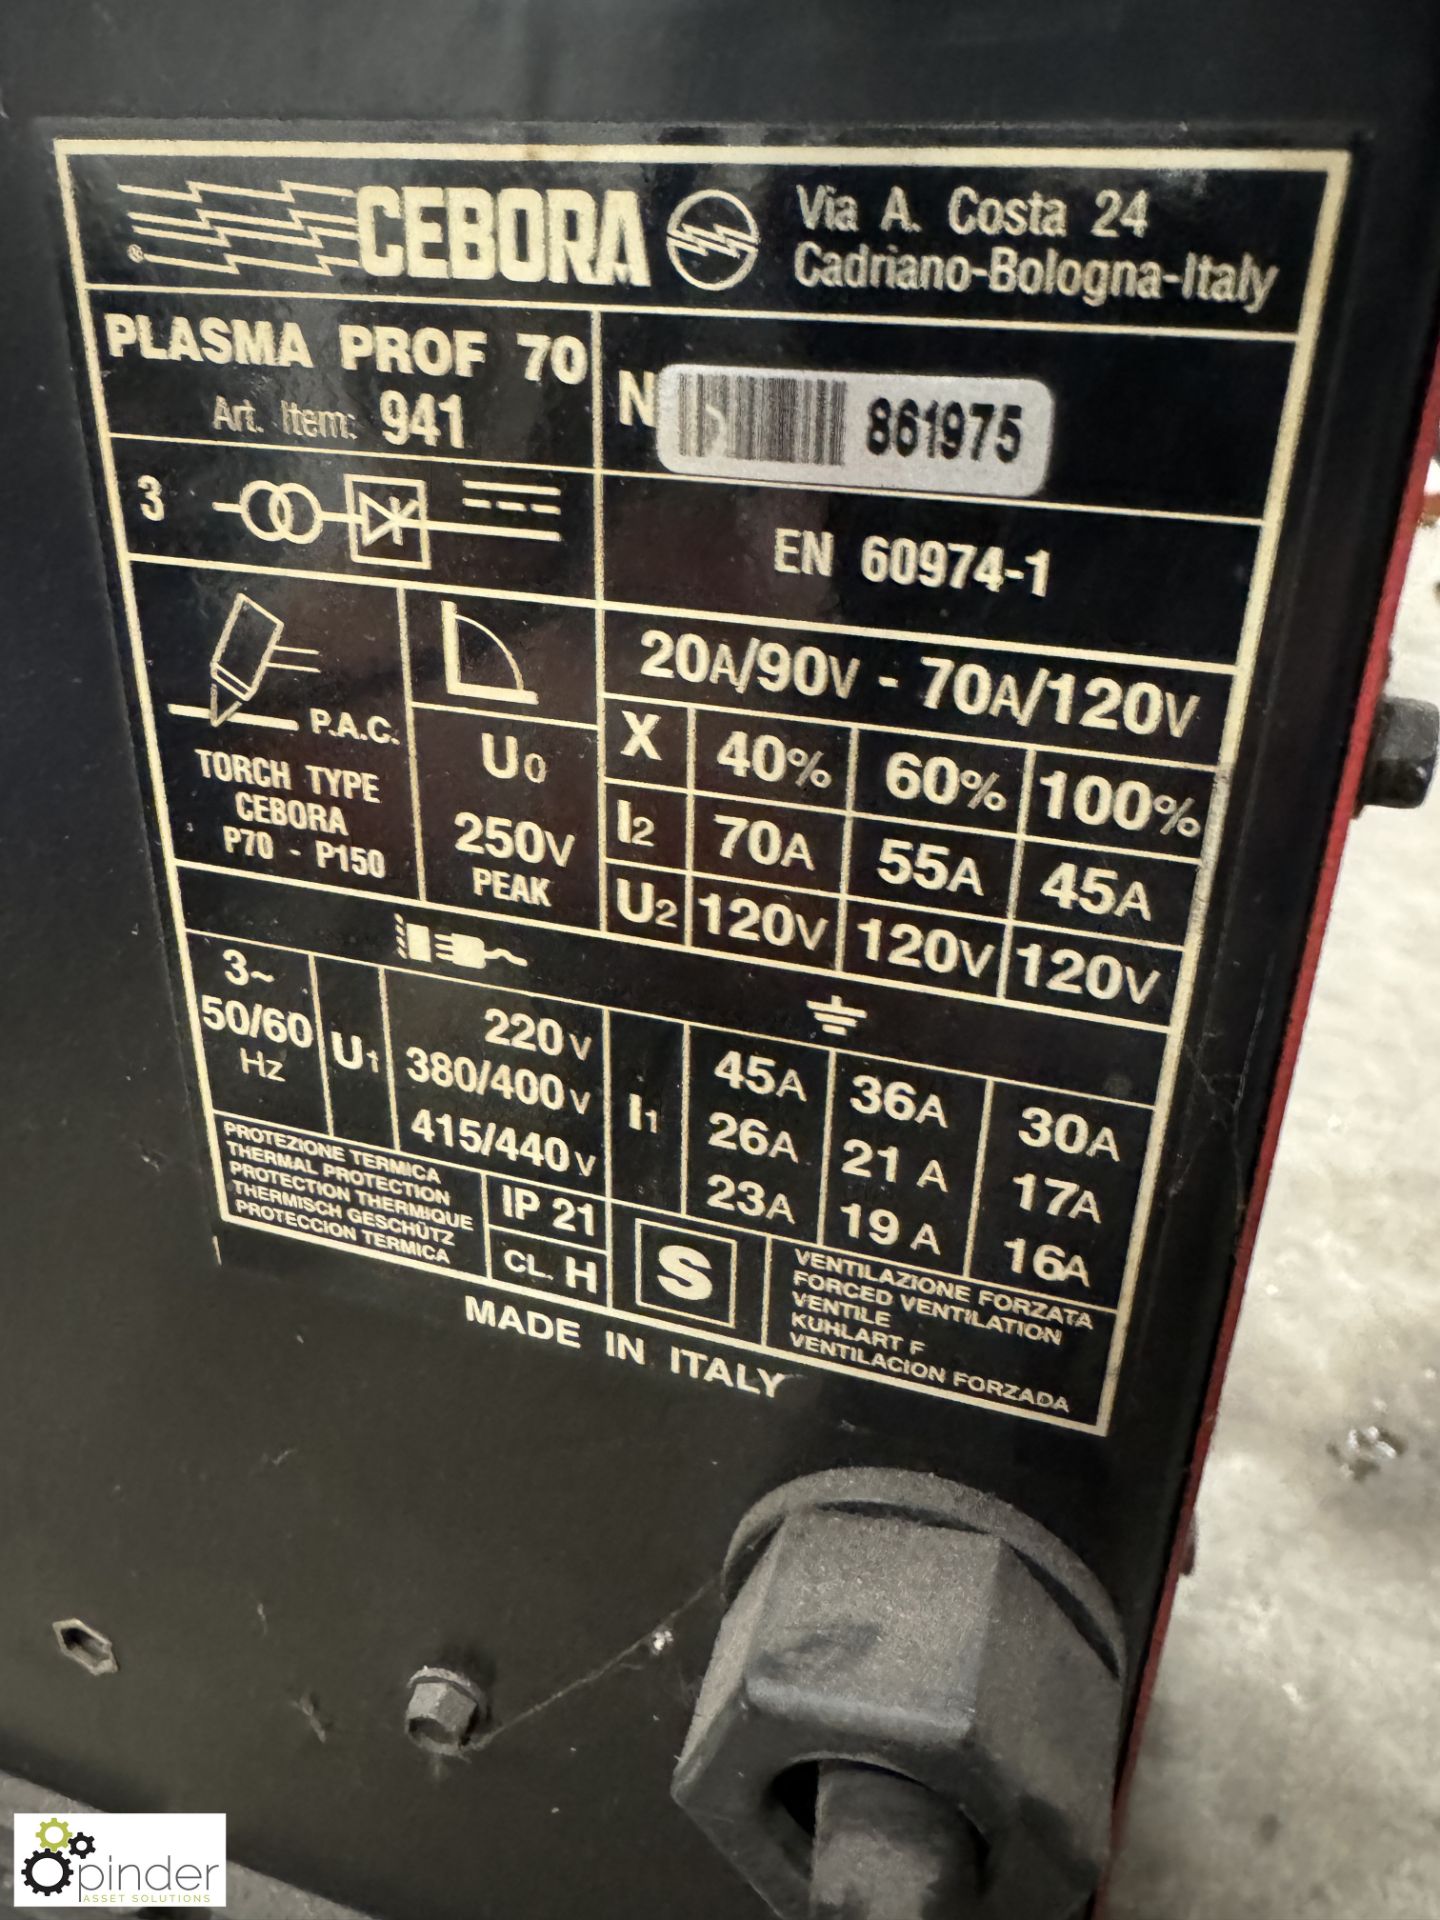 Cebora Plasma Prof70 Plasma Cutter, 415volts - Image 4 of 6